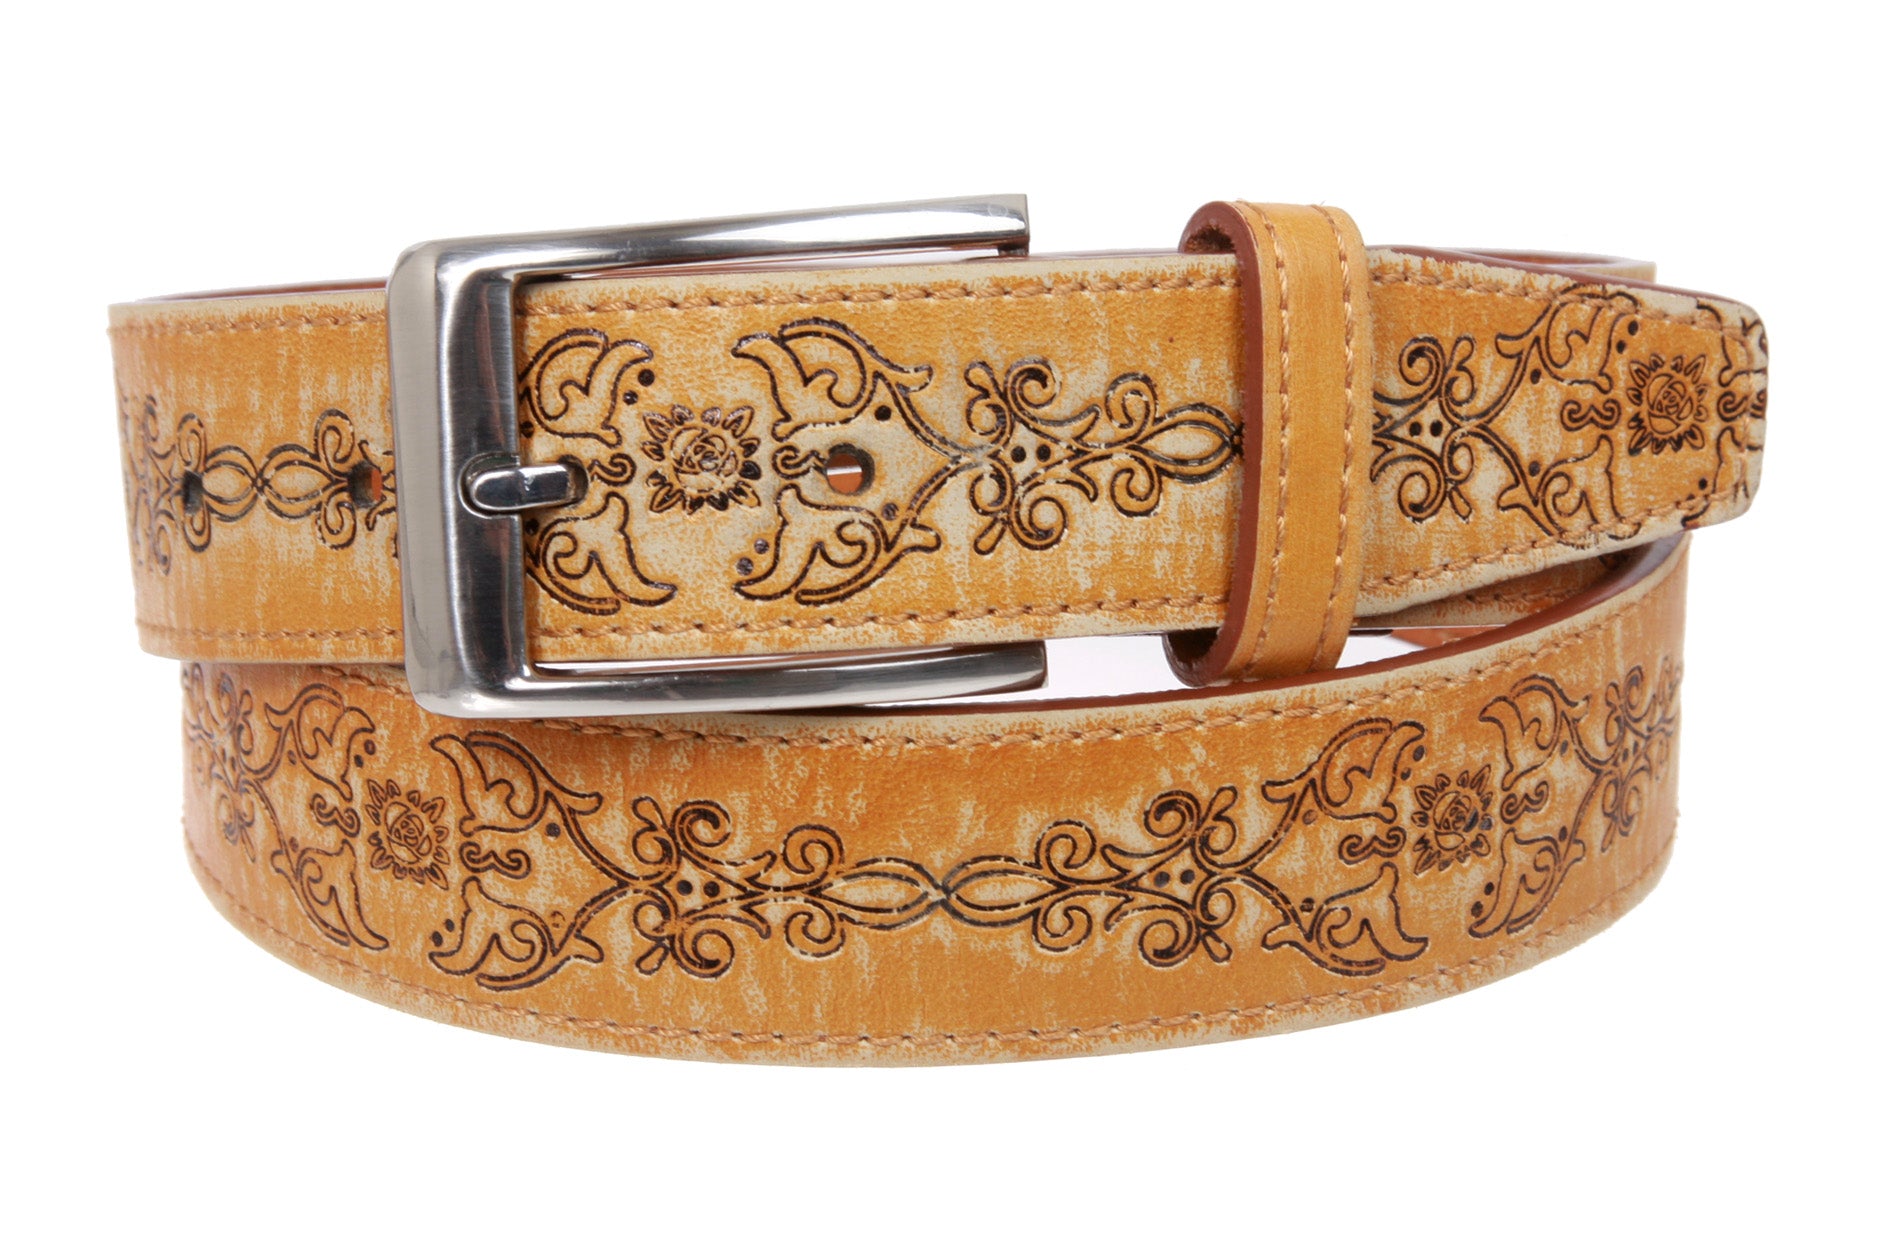 1 5/16'' Floral Embossed Stitching Vintage Leather Belt